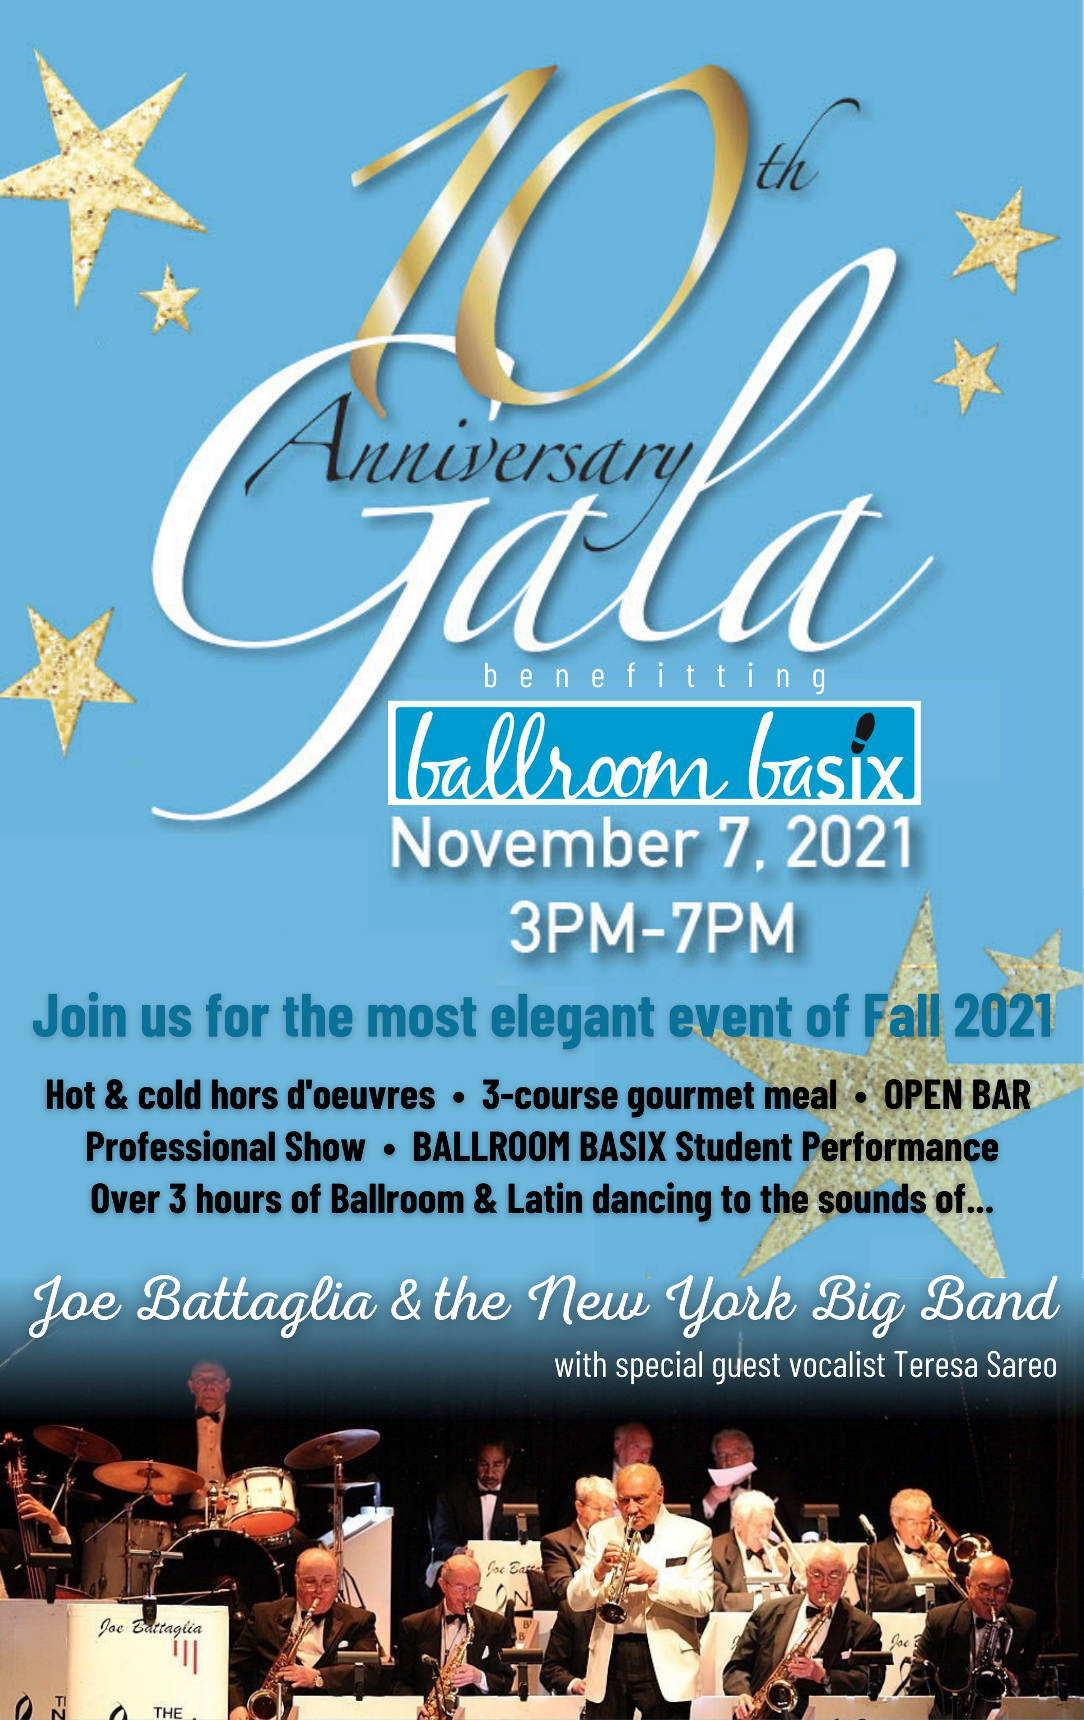 BALLROOM BASIX to Present the 10th Annual Gala on November 7